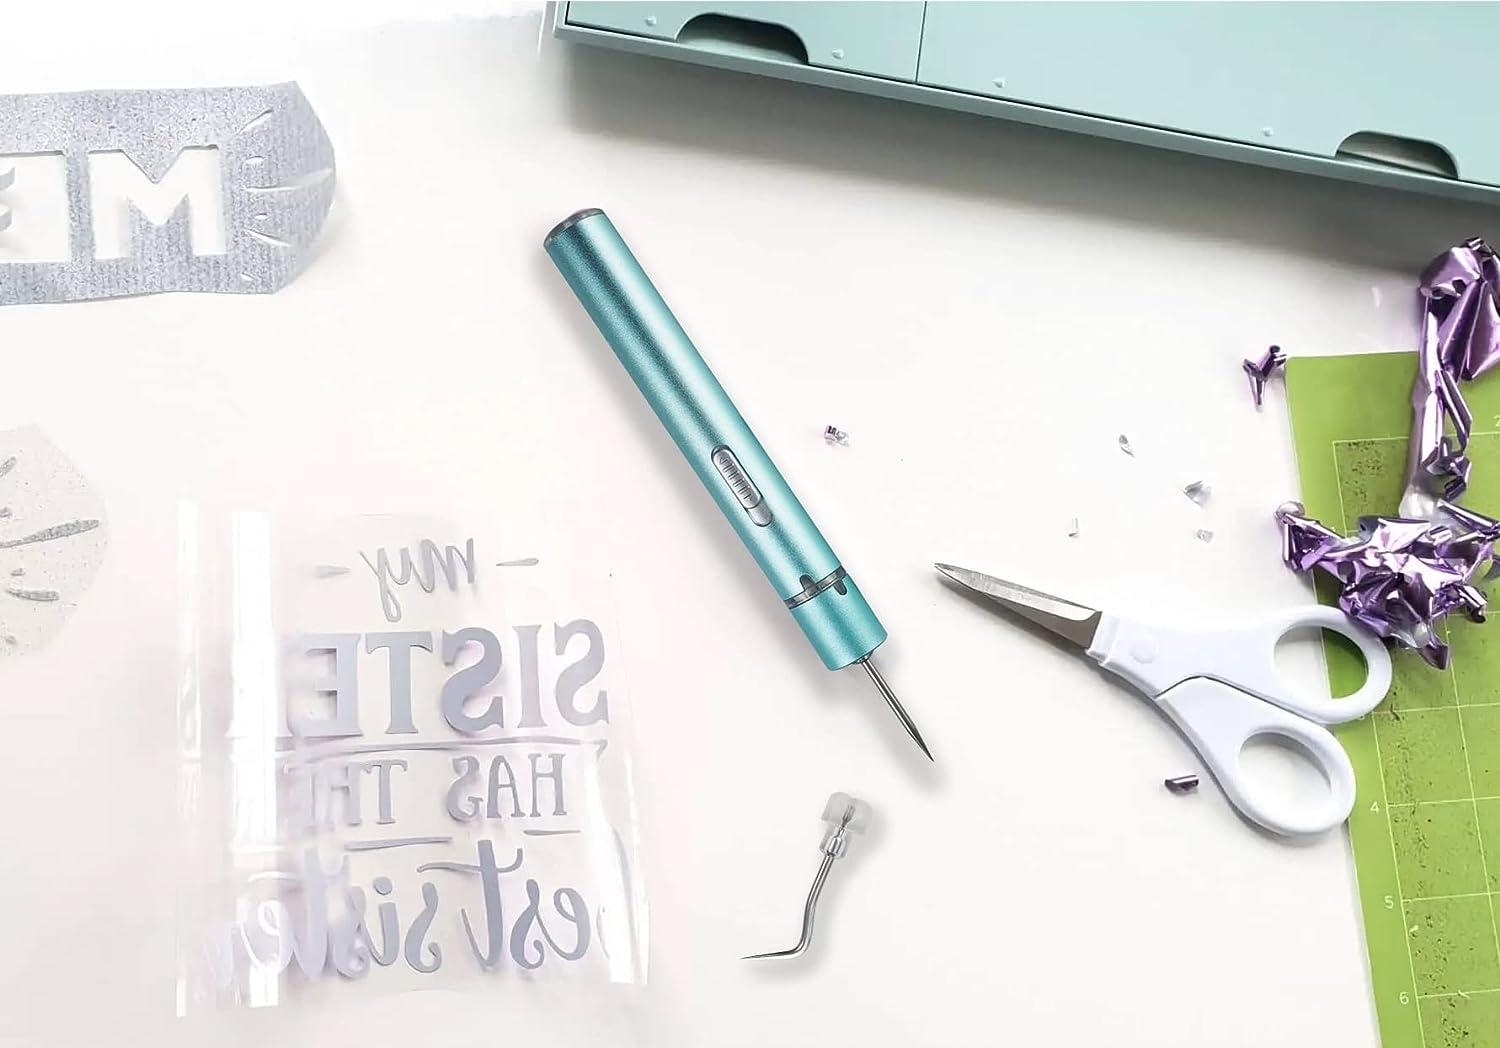 Vinyl Weeding Tool DIY Craft w/LED Light for Cricut Lettering Kit Tool